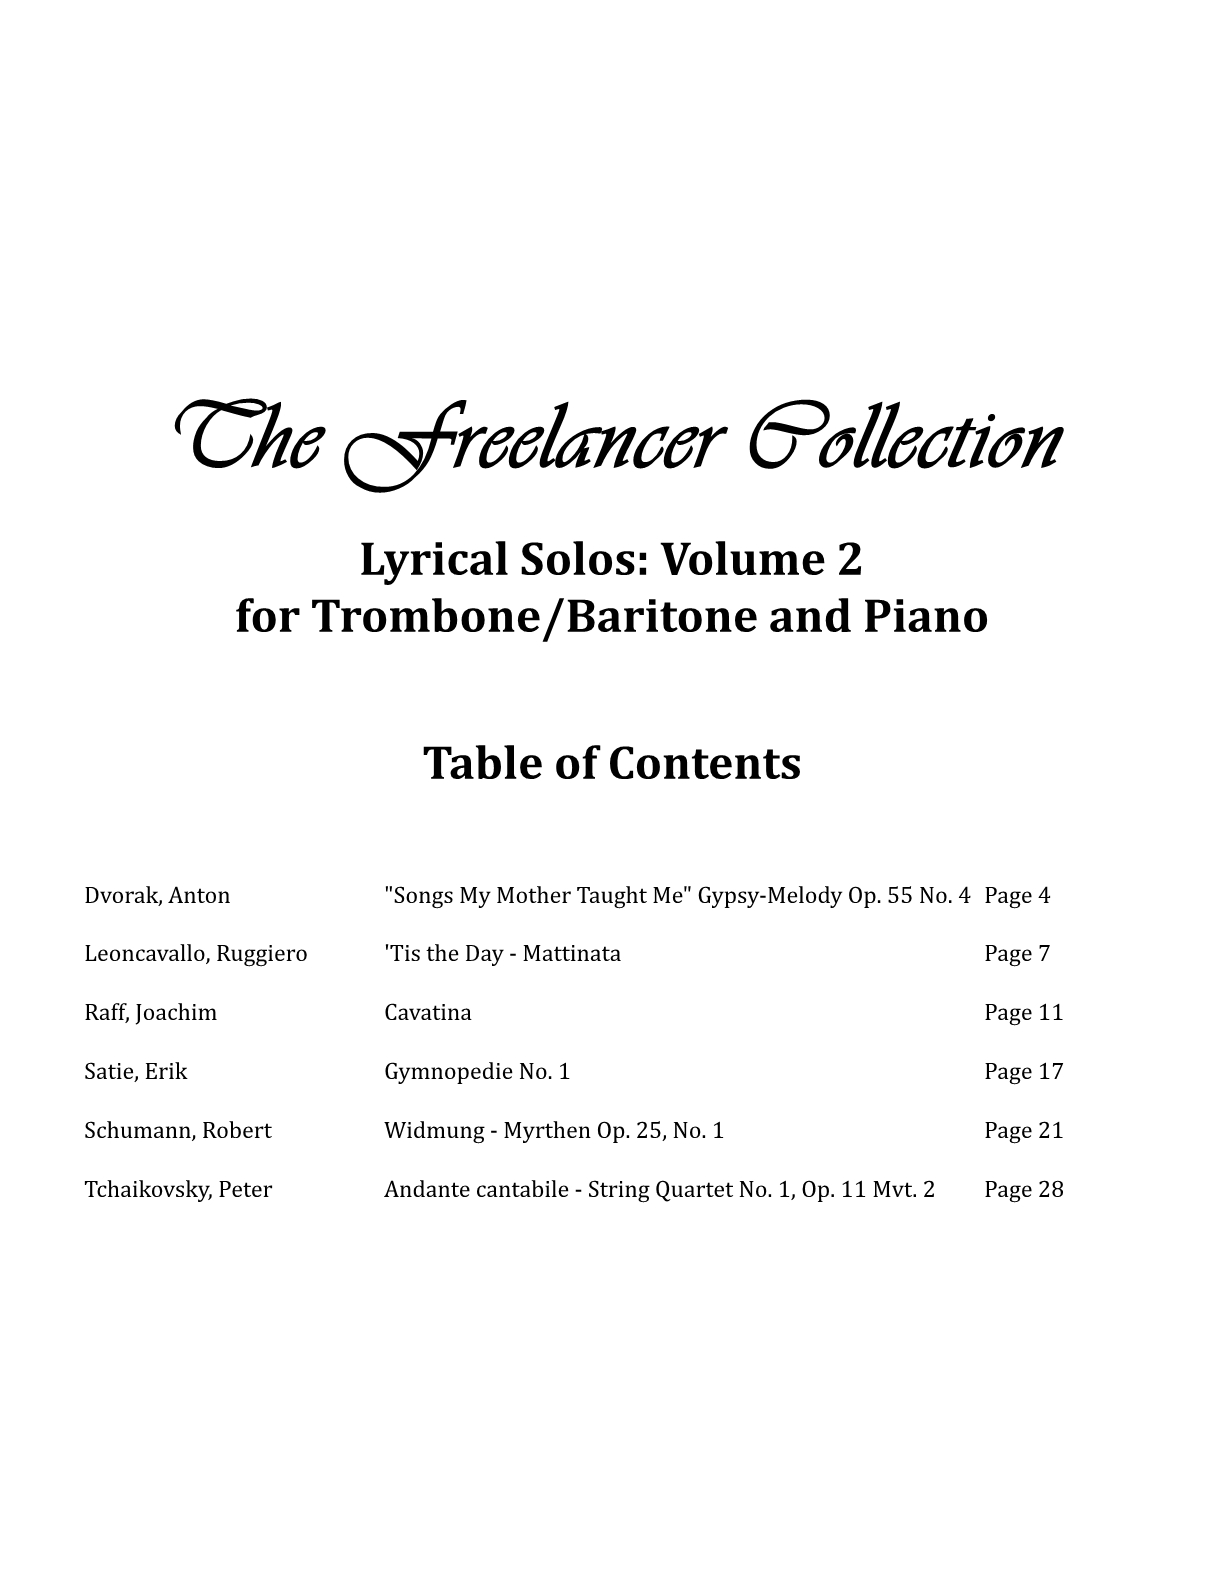 Hepler - Freelancer Collection Lyrical Solos Vol 2 (Trb & Piano)